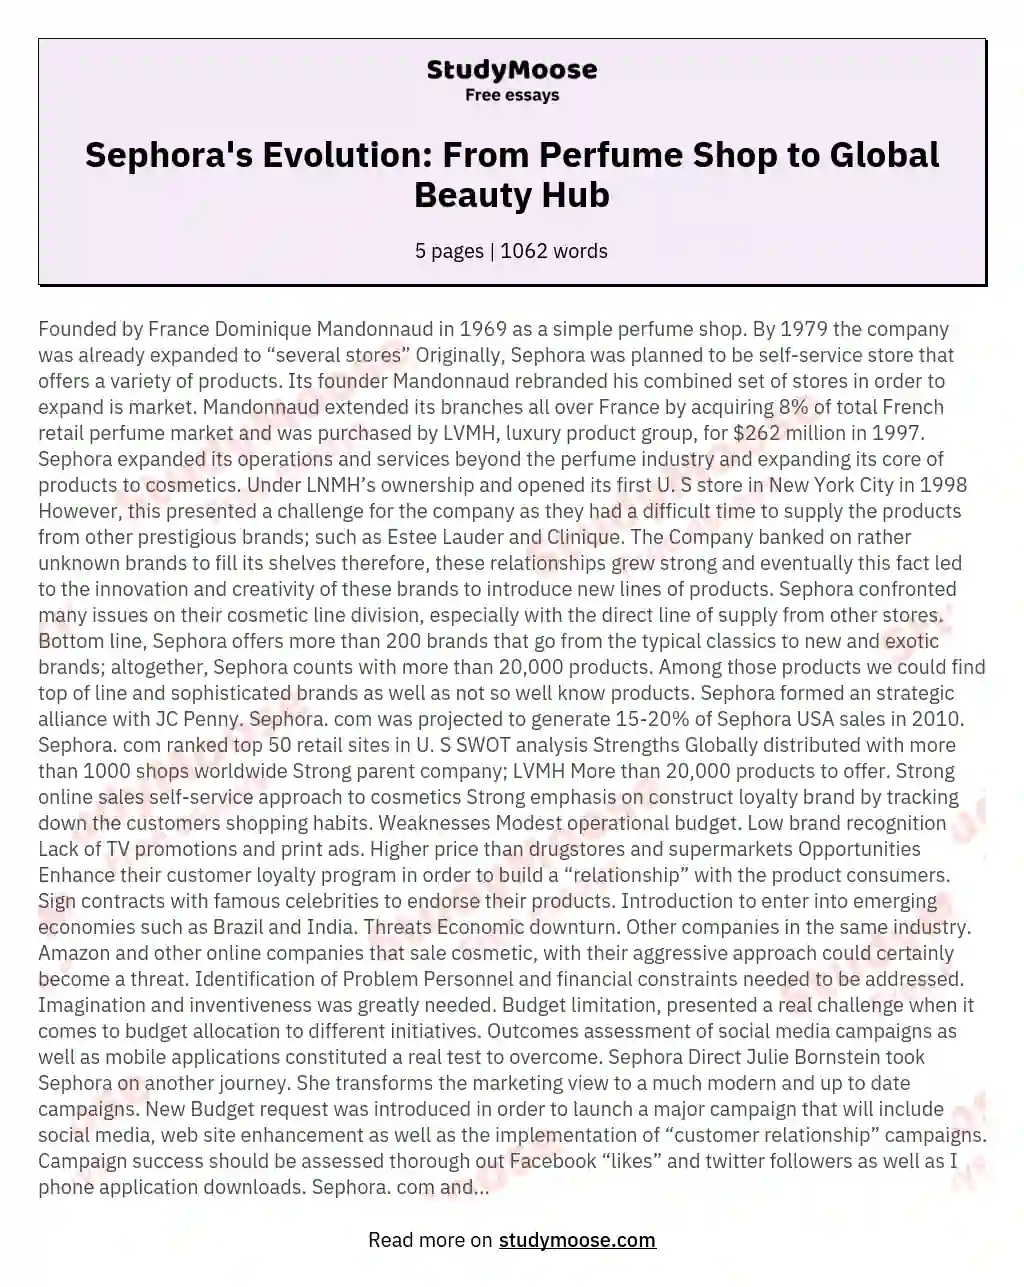 Sephora's Evolution: From Perfume Shop to Global Beauty Hub essay